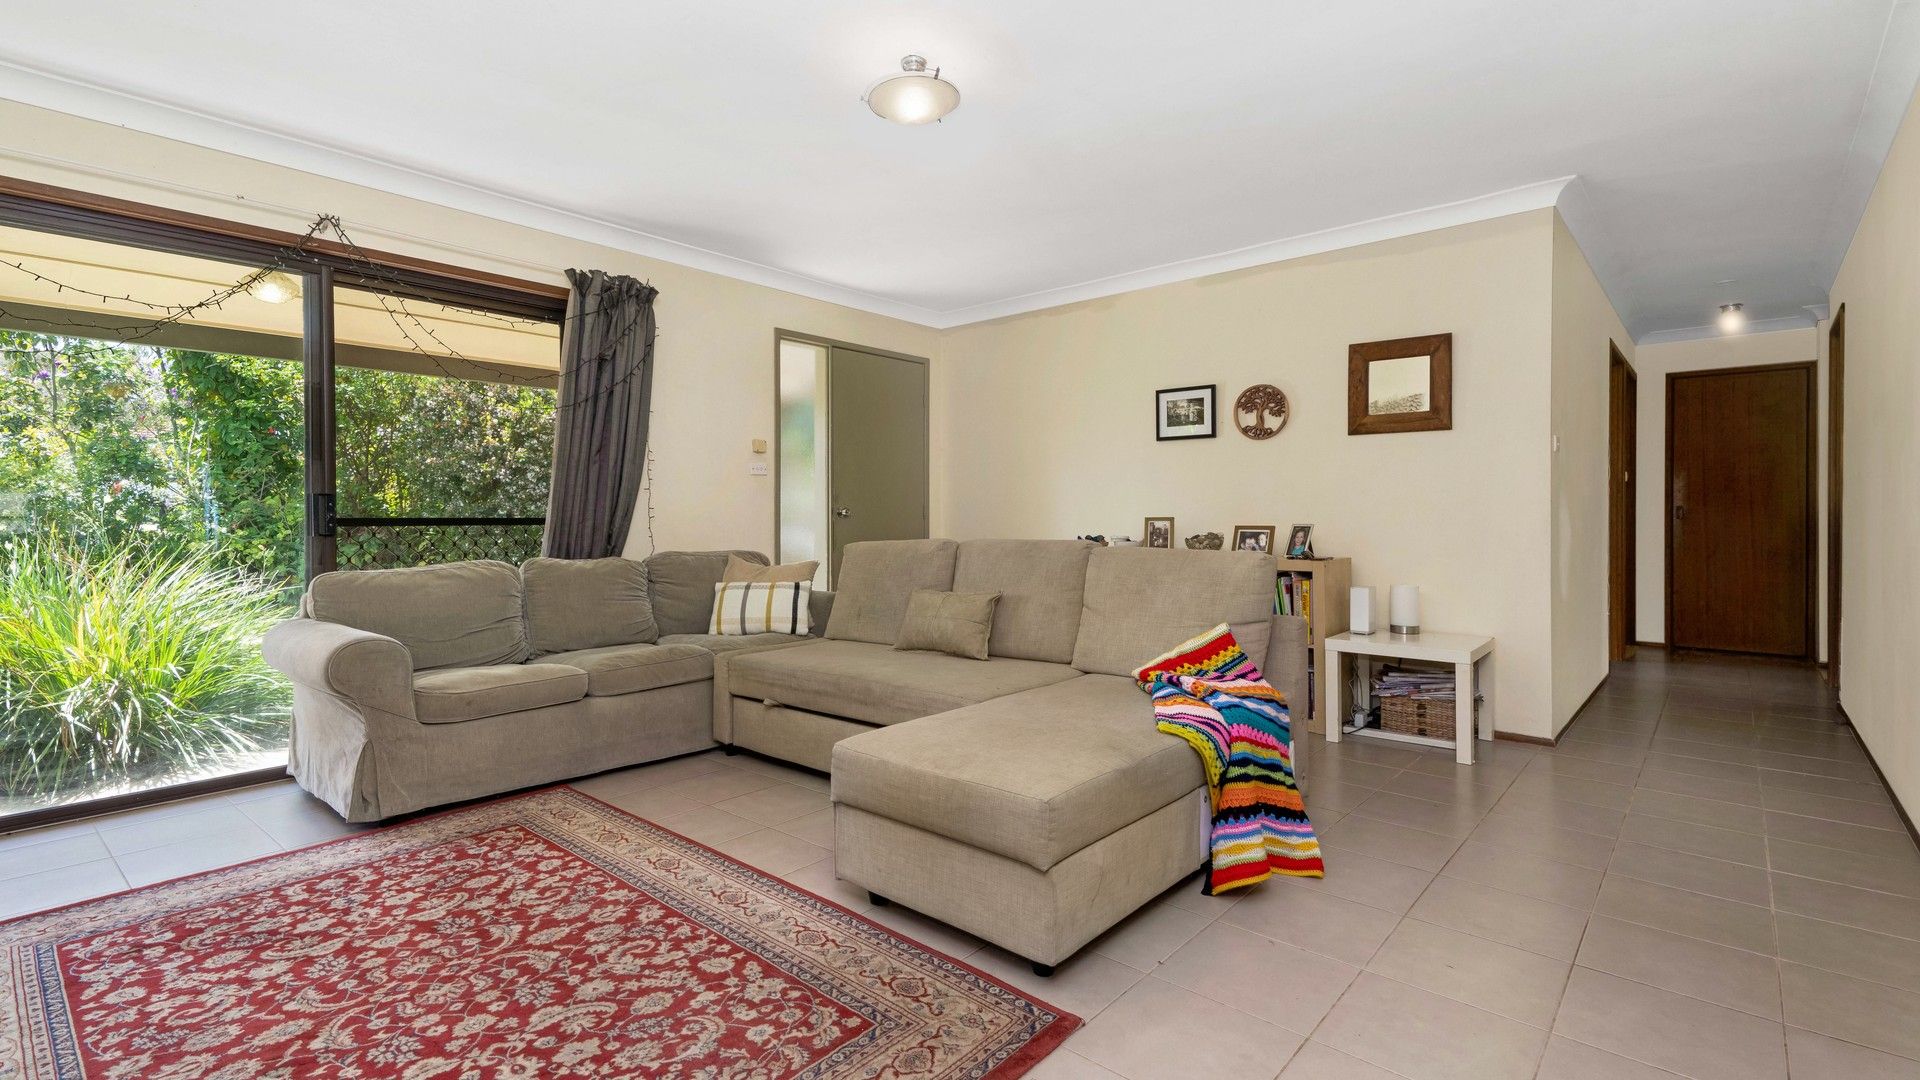 3 bedrooms House in 76 Orana Rd OCEAN SHORES NSW, 2483